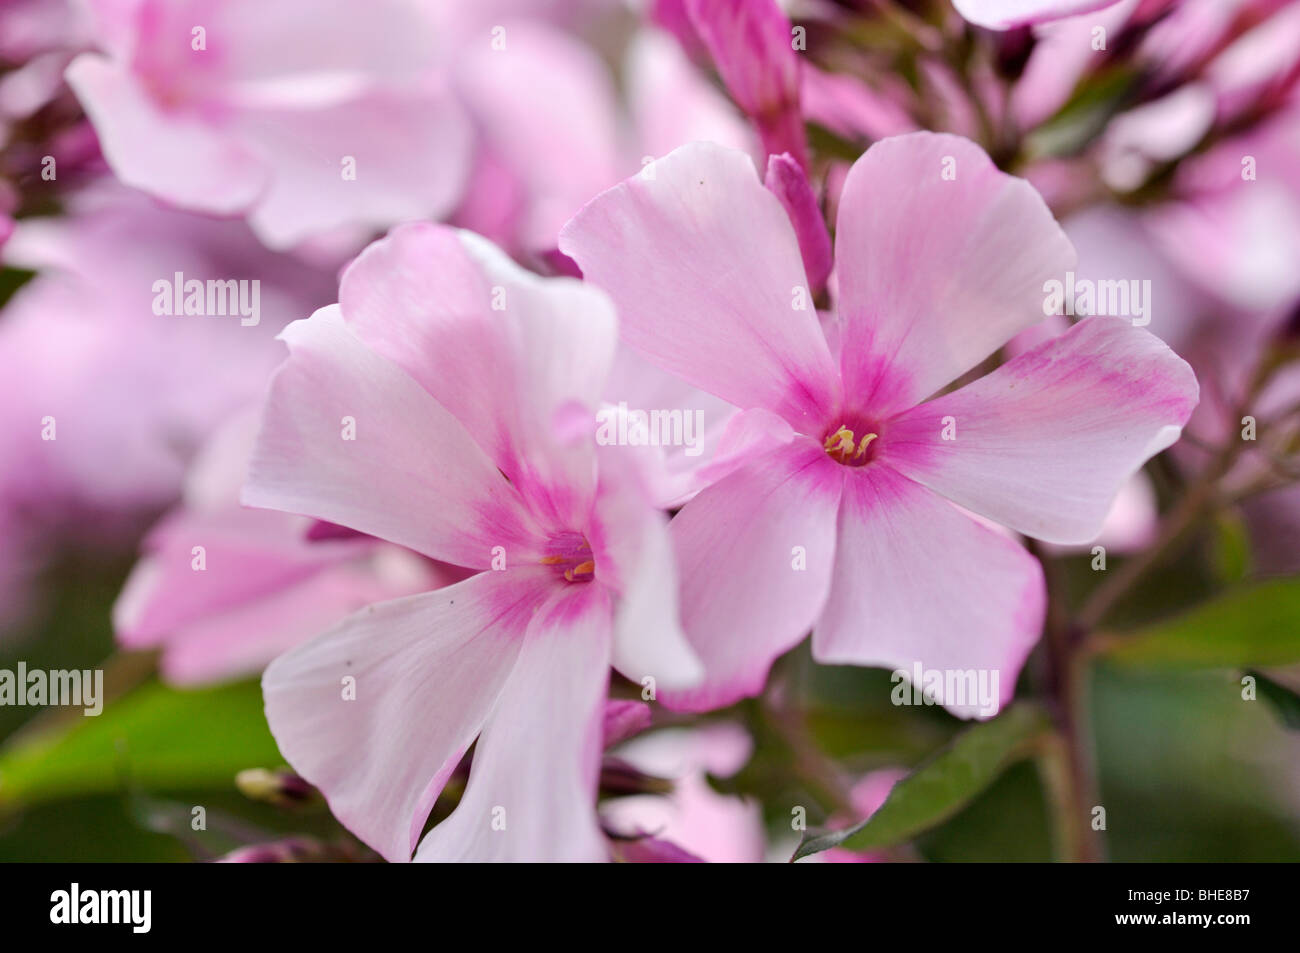 Garden phlox (Phlox paniculata 'Rosenlicht') Stock Photo